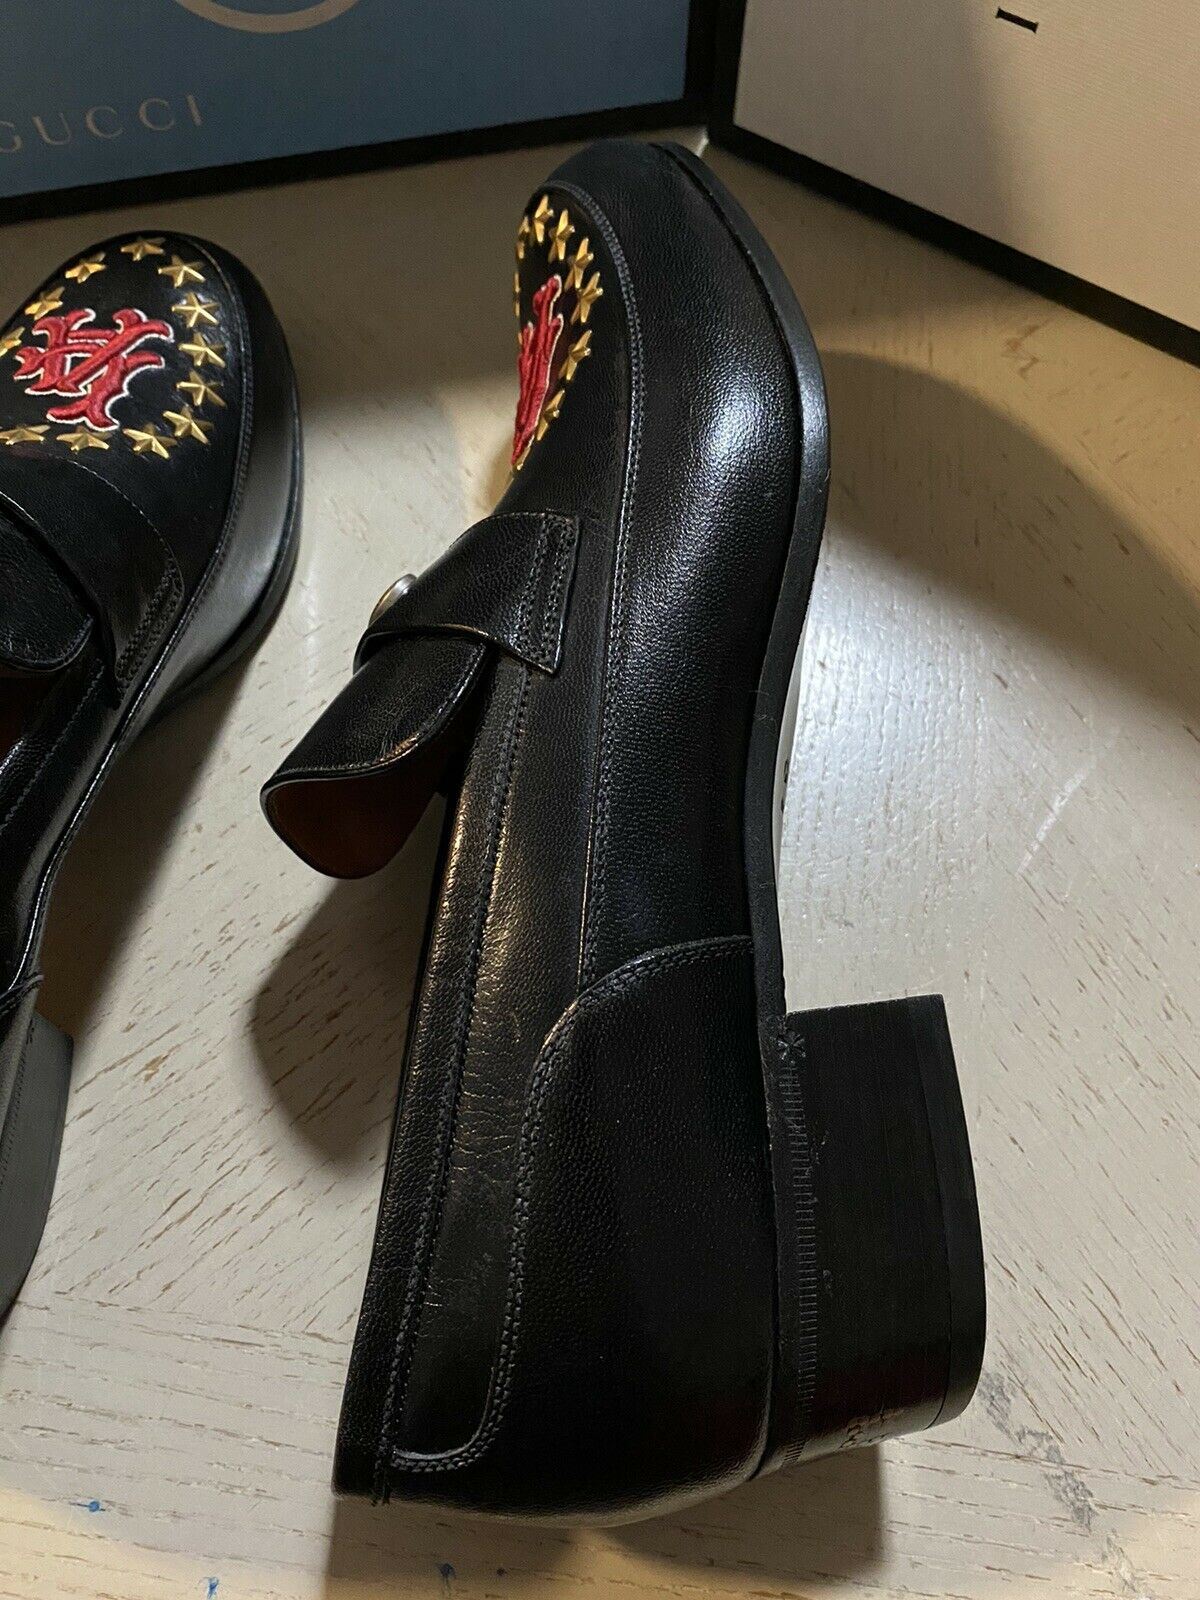 Neu 1190 $ Gucci Herren GG Leder Loafer Schuhe Schwarz 8,5 US ( 7,5 UK )